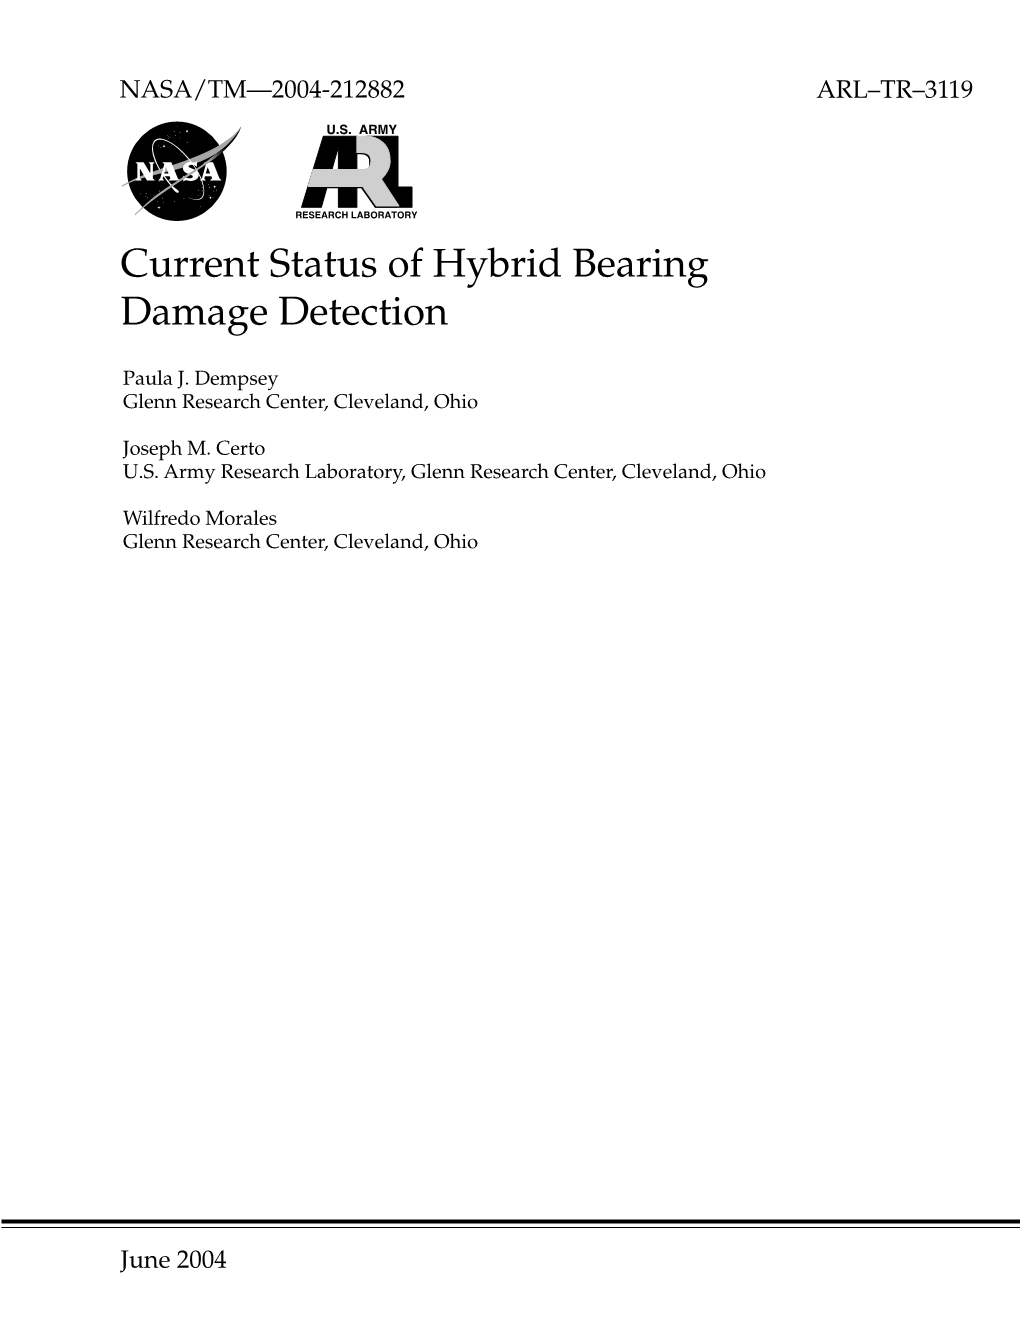 Current Status of Hybrid Bearing Damage Detection